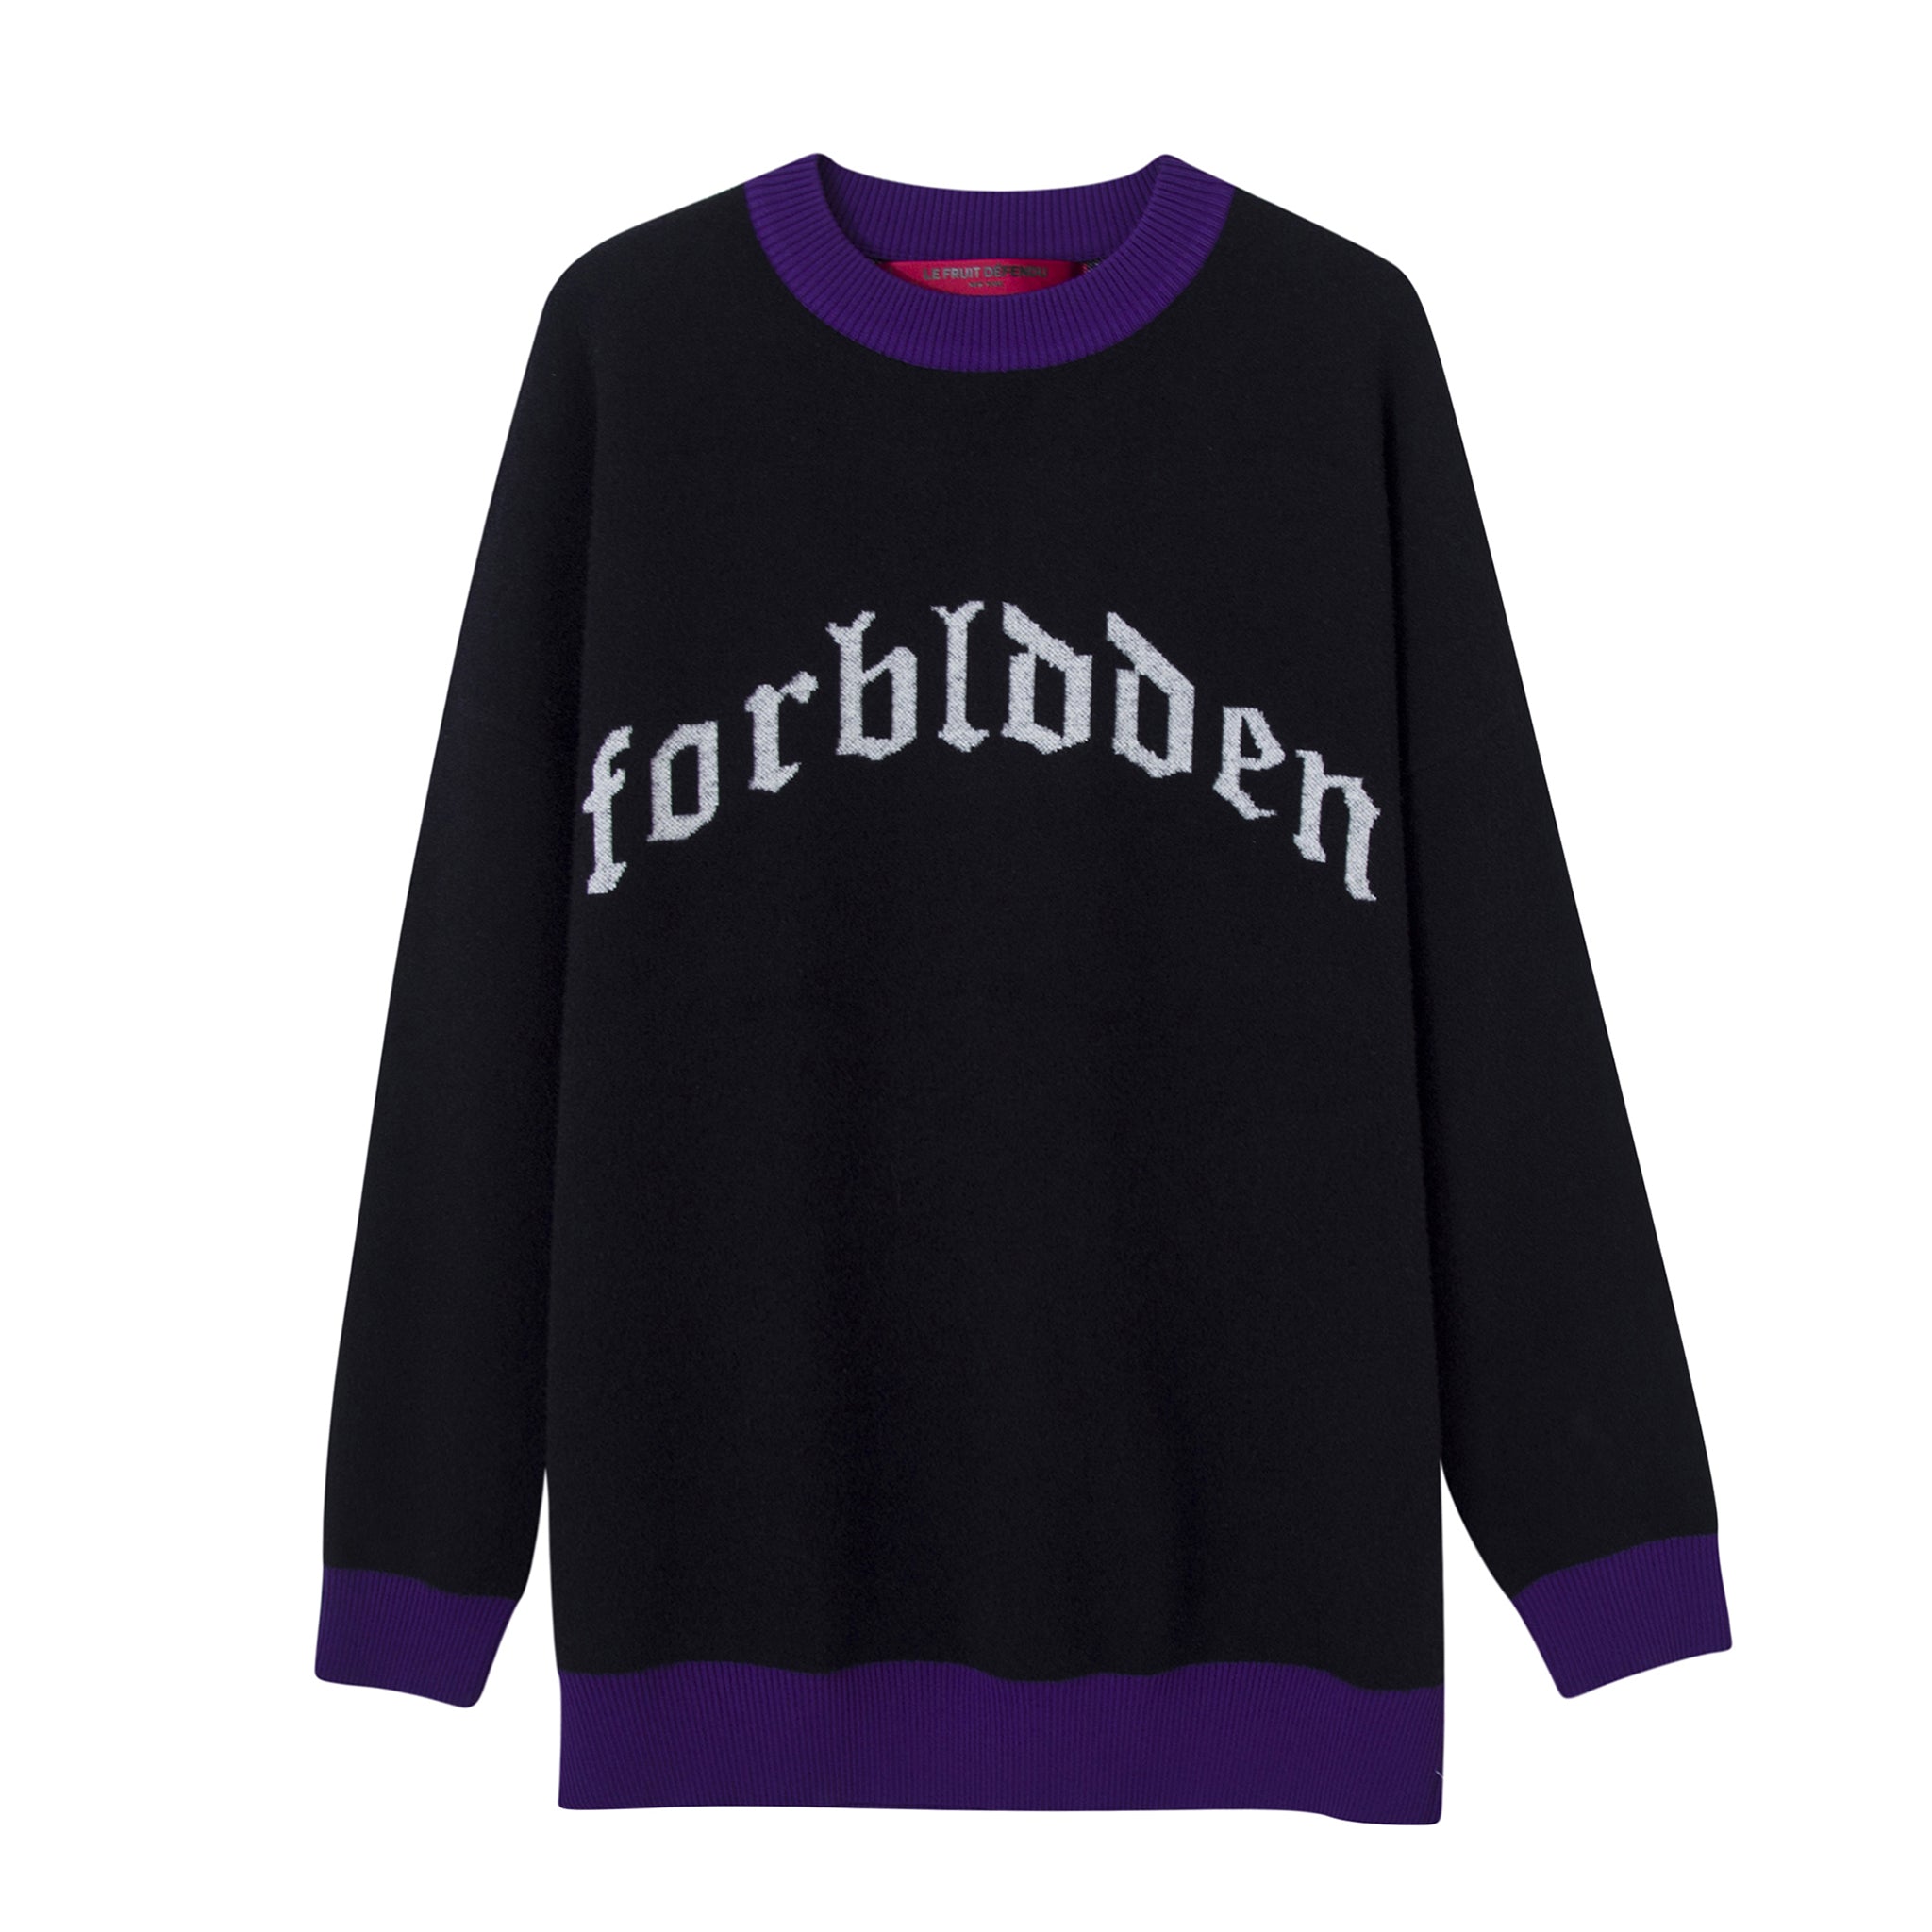 ‘Forbidden’ Casual Boyfriend Sweater